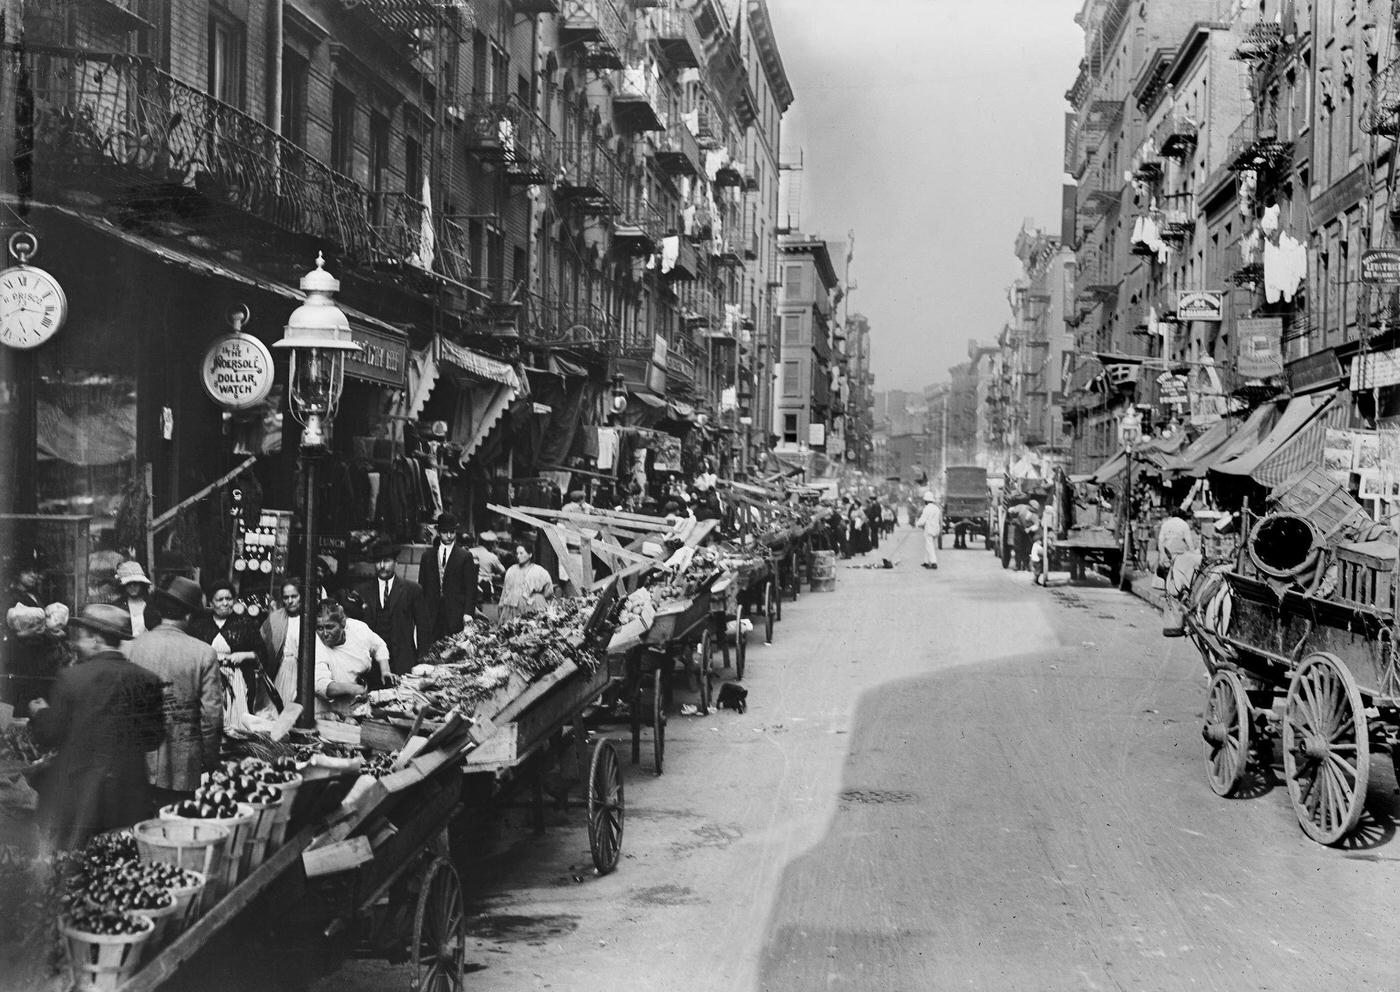 Italian Neighborhood With Street Market, Mulberry Street, New York City, 1900